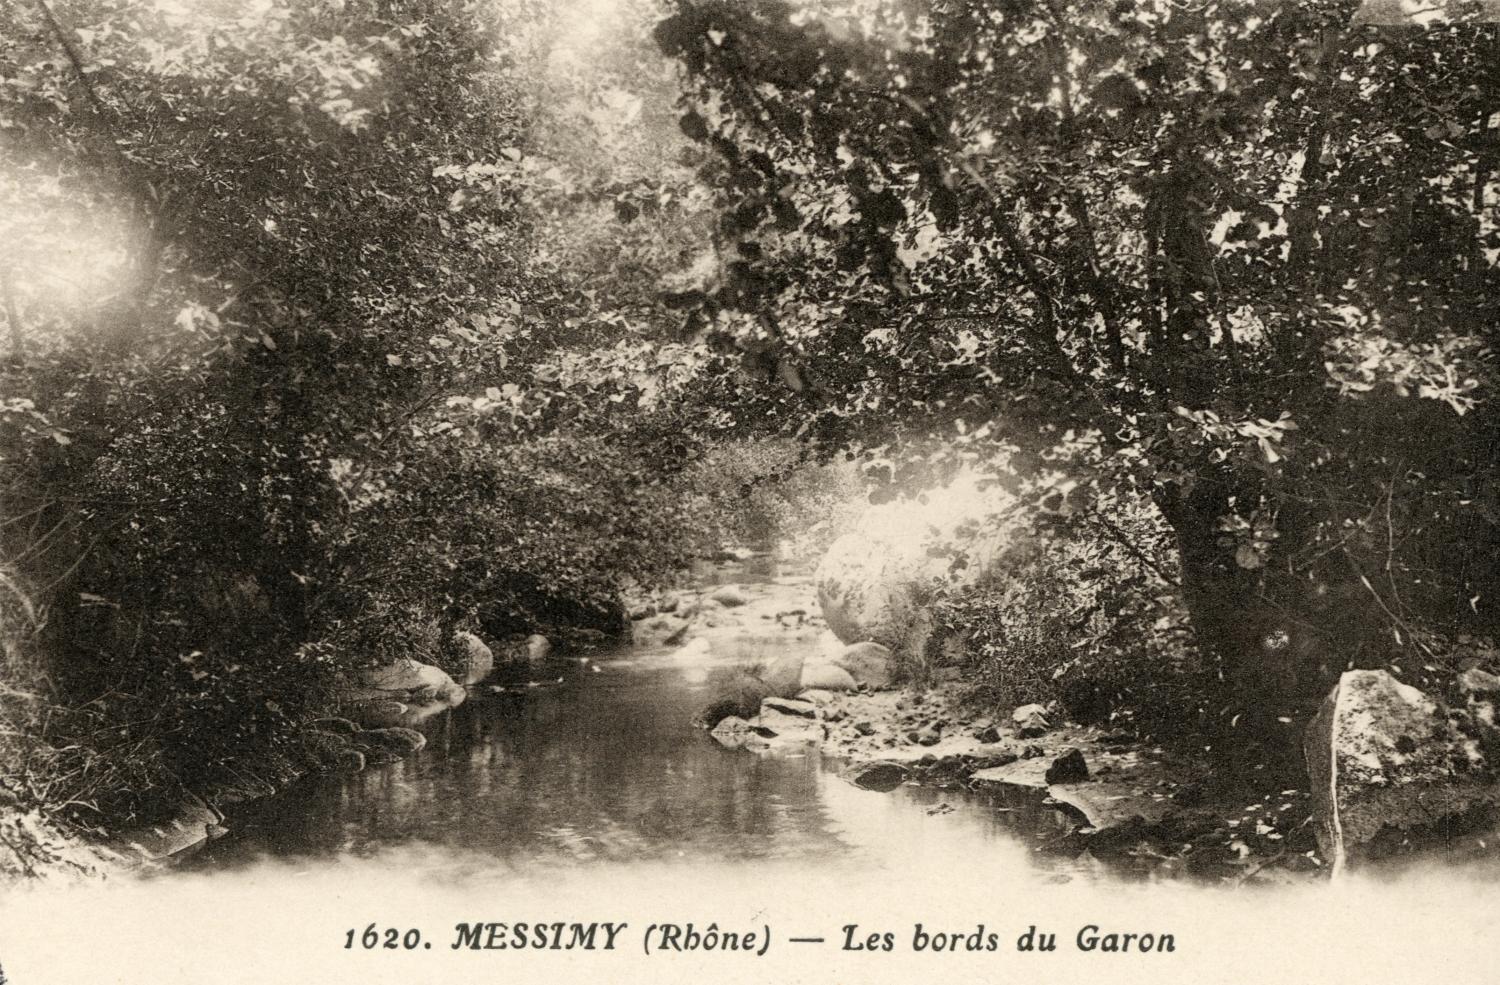 Messimy (Rhône). - Les bords du Garon